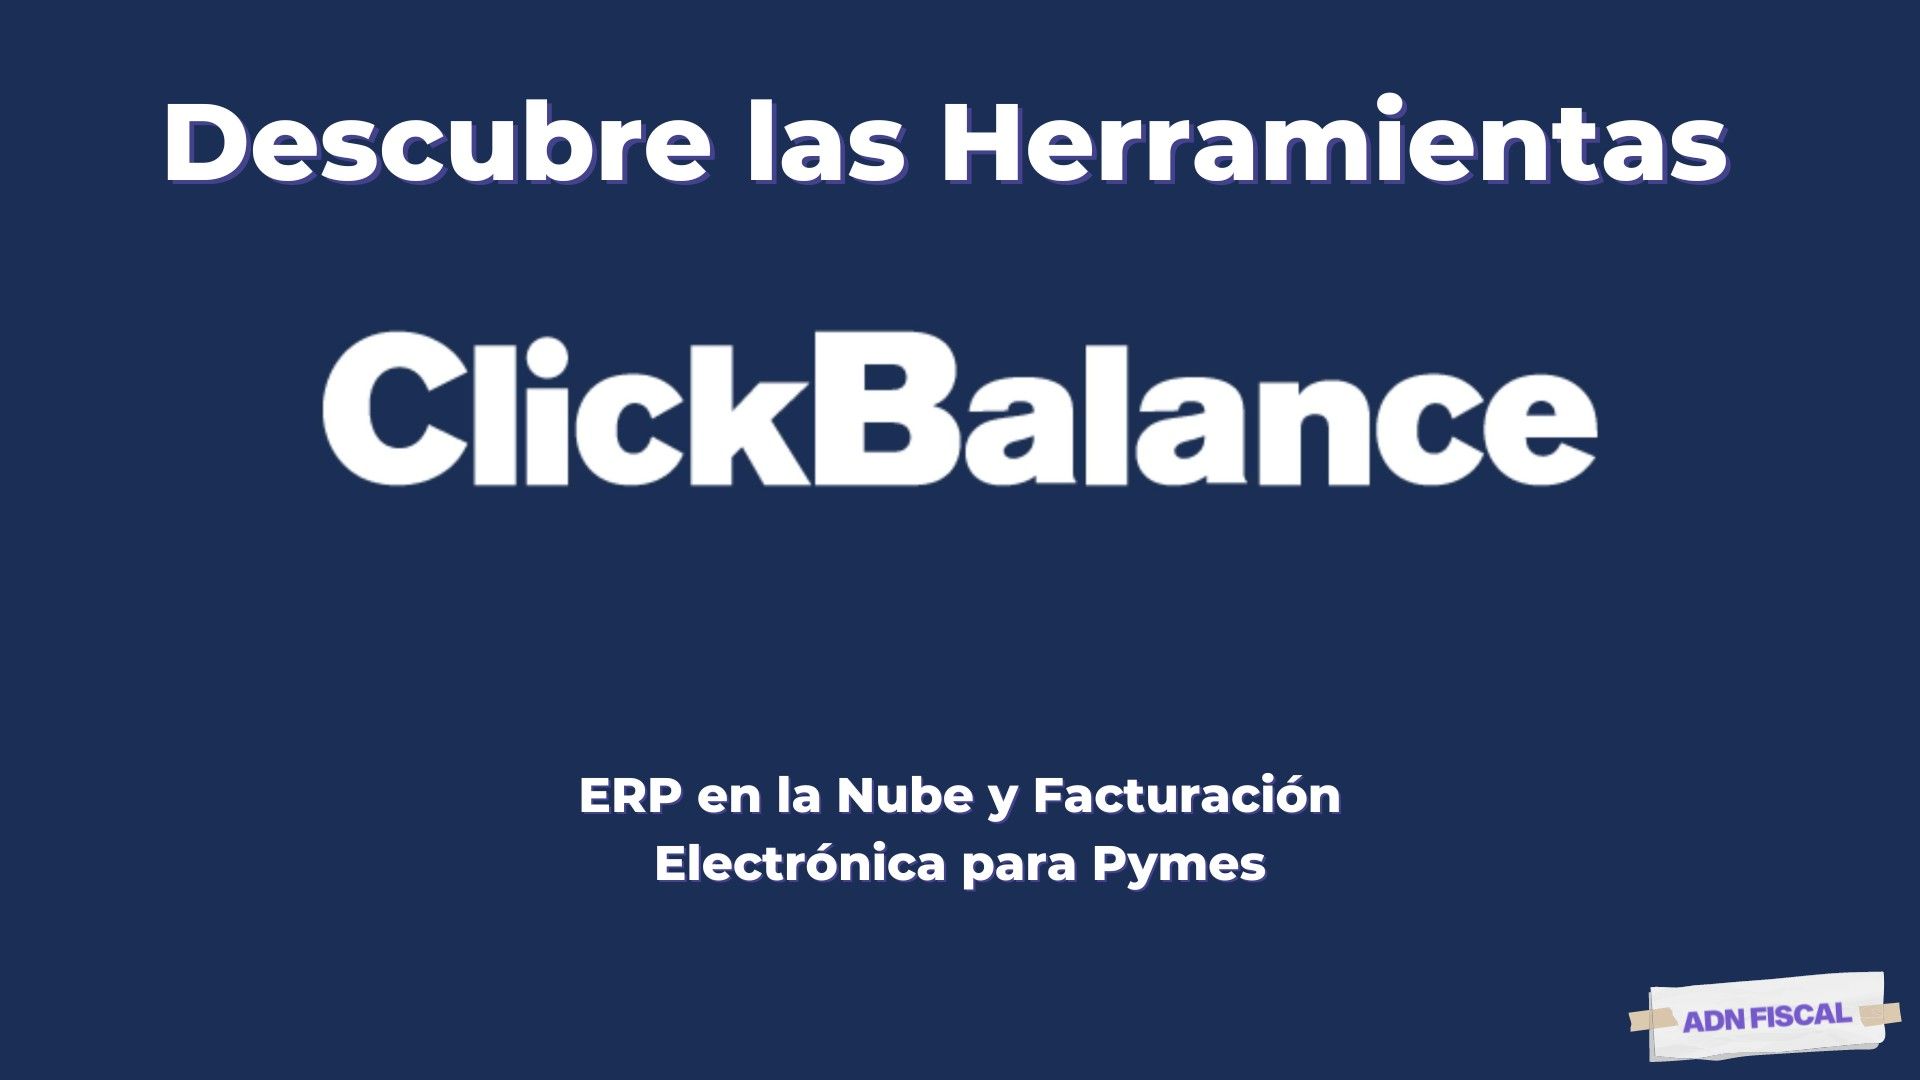 ClickBalance, ERP y Facturación para Pymes